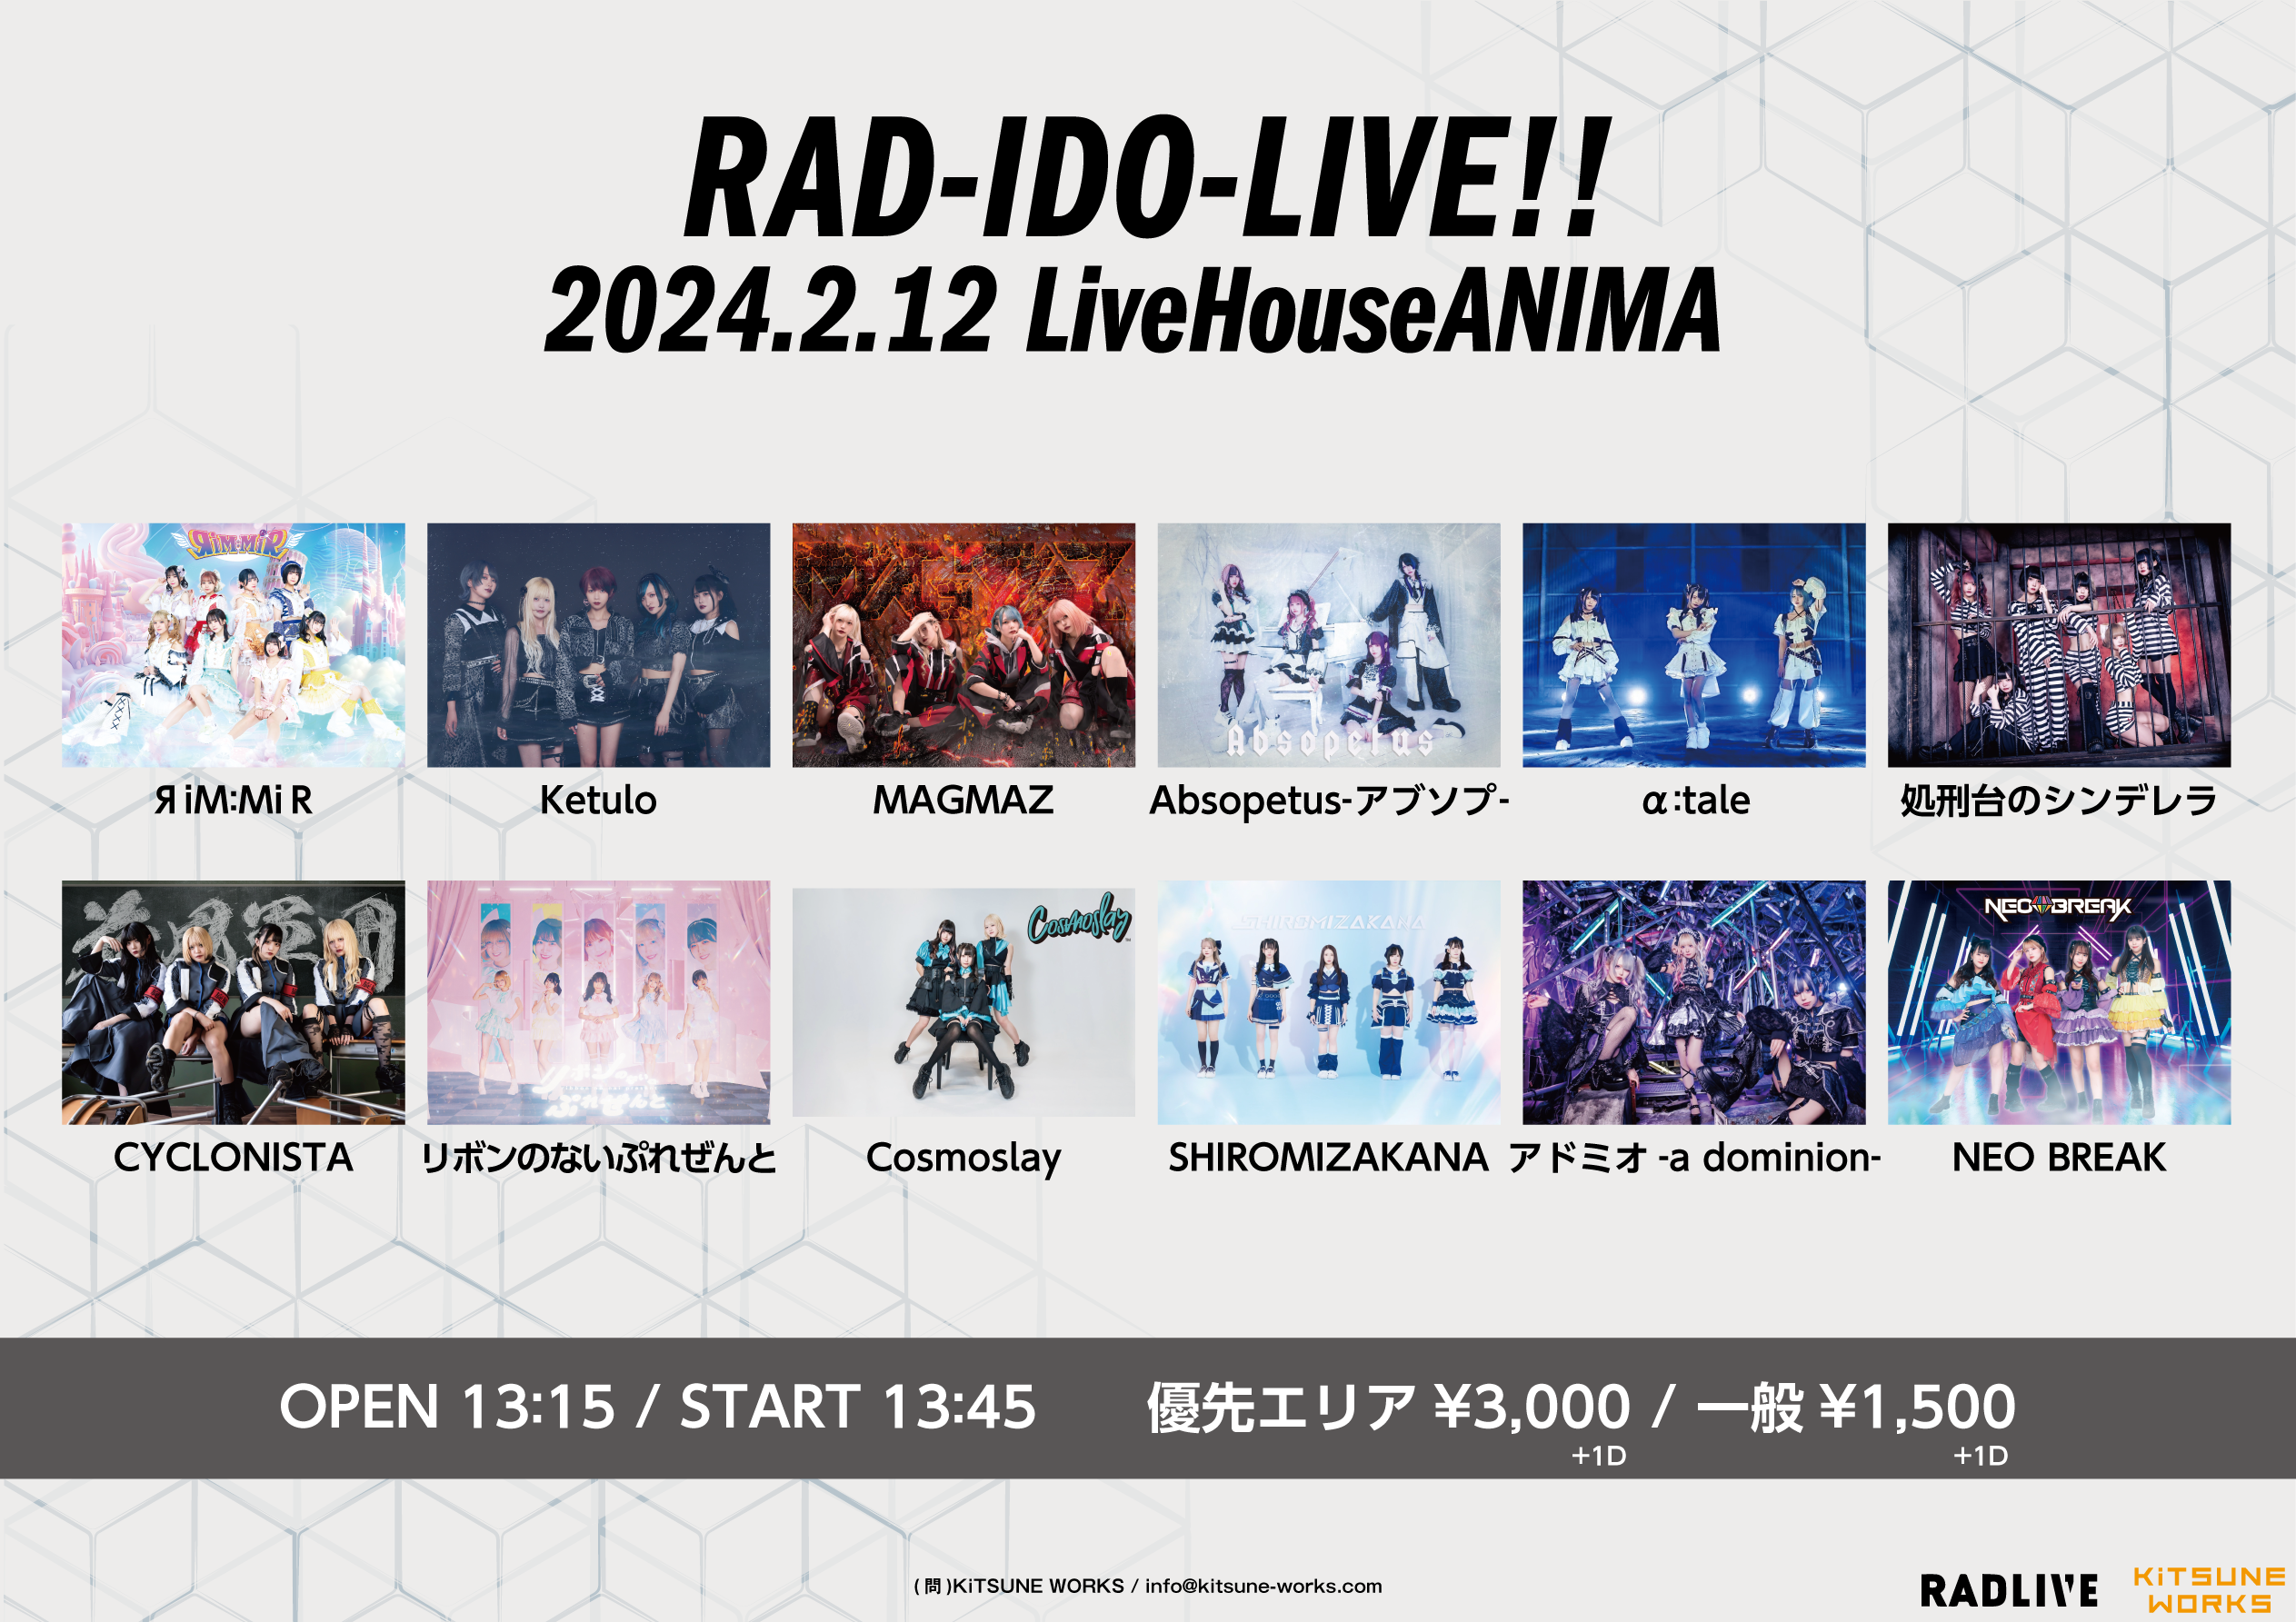 【2/12】RAD-IDO-LIVE!! at LiveHouseANIMA